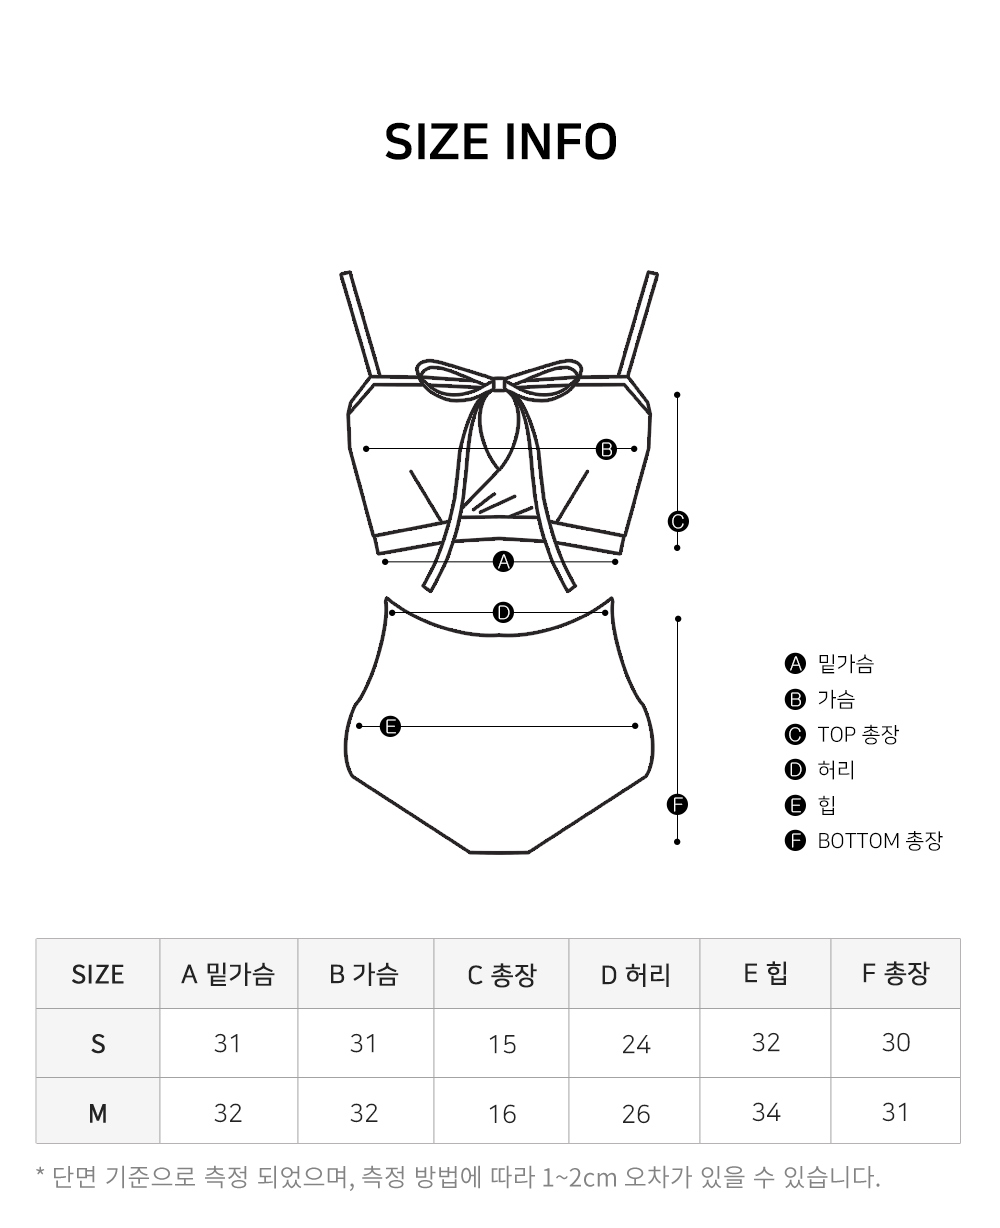 Swimwear / underwear product image -S6L1